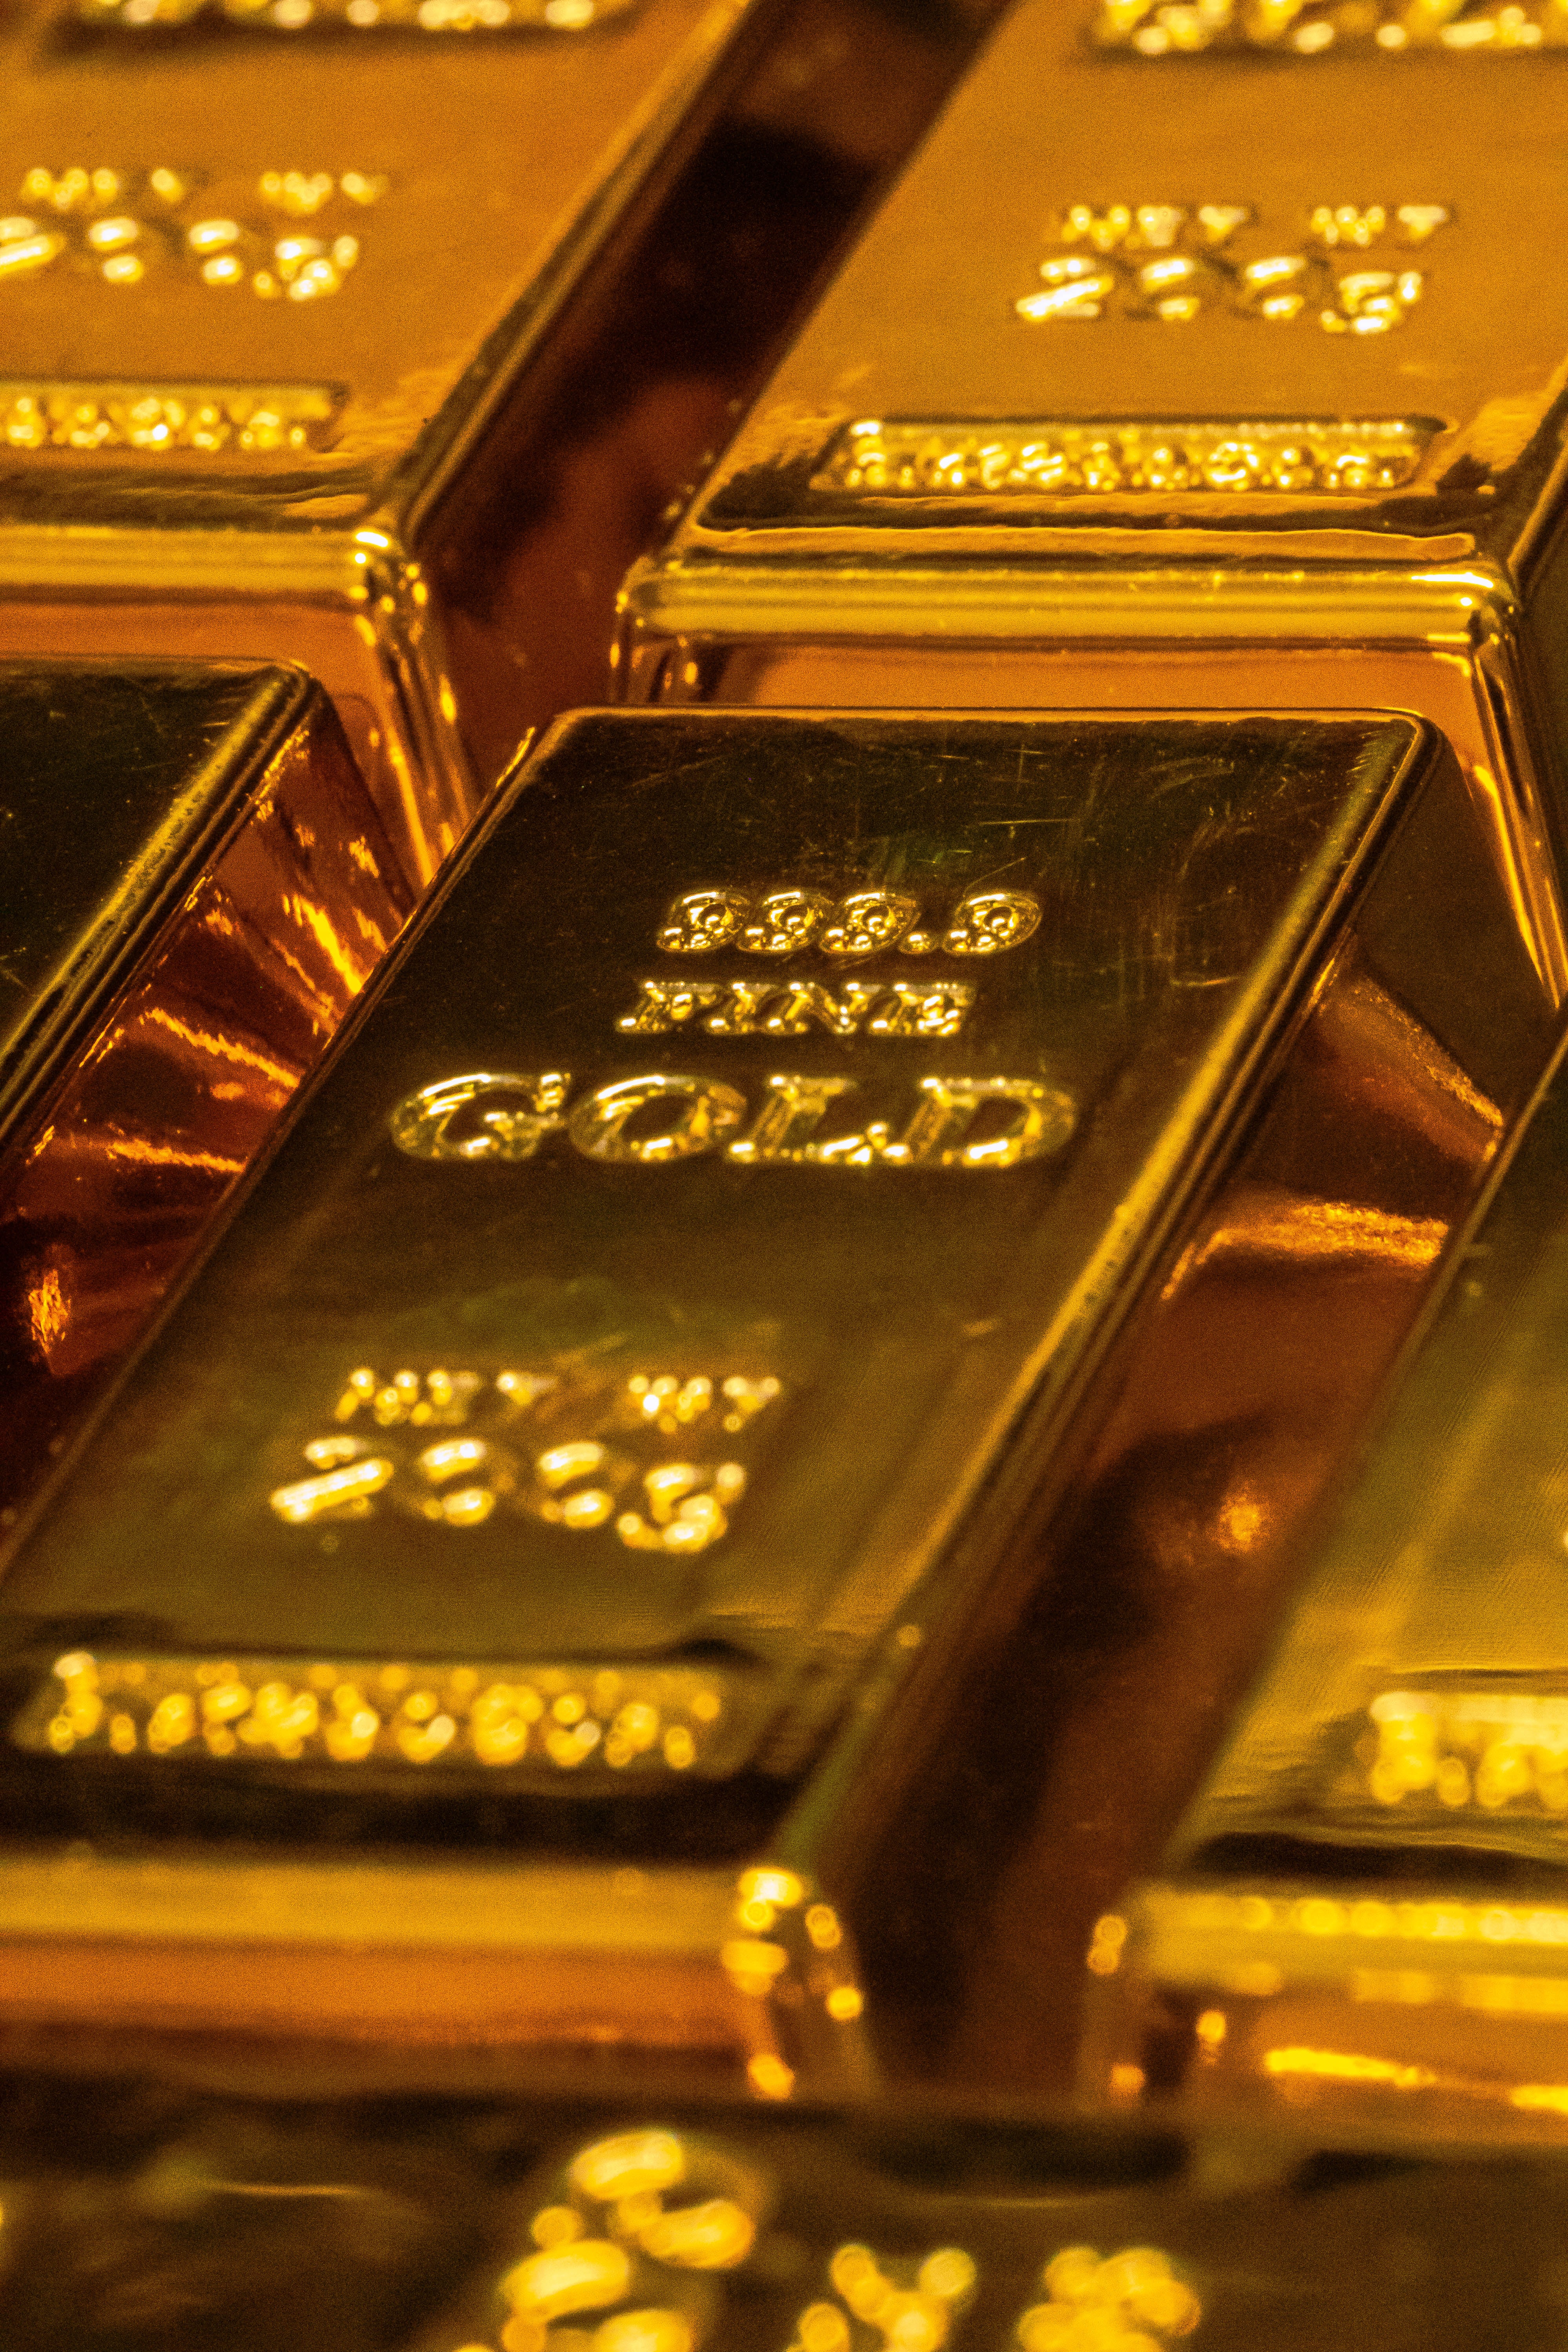 Gold IRA investing companies